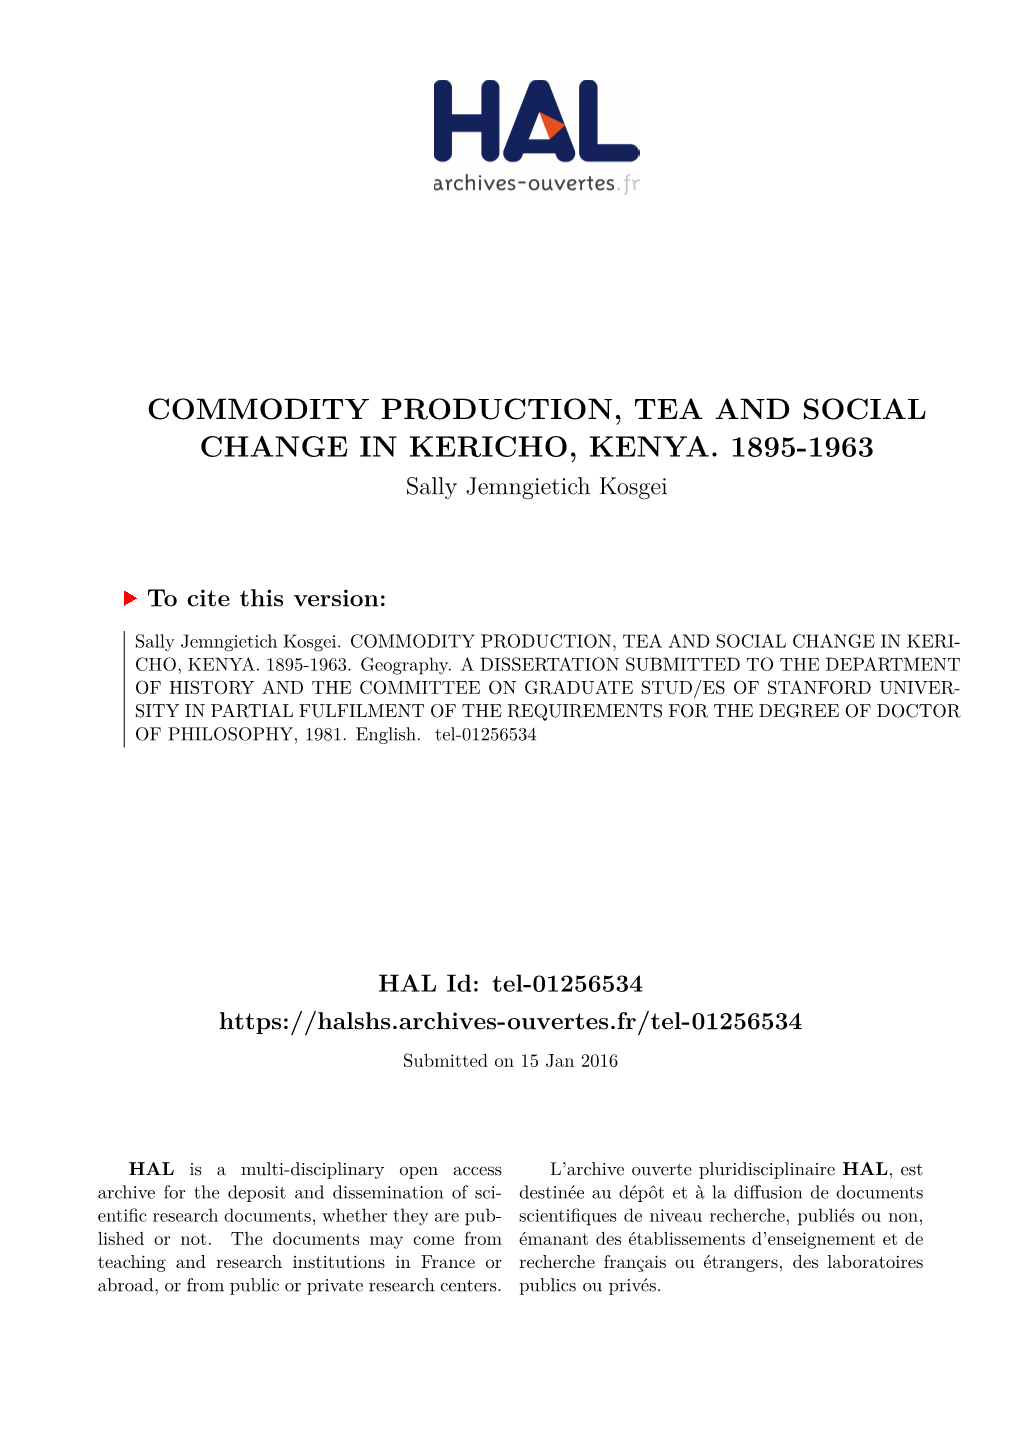 Commodity Production, Tea and Social Change in Kericho, Kenya